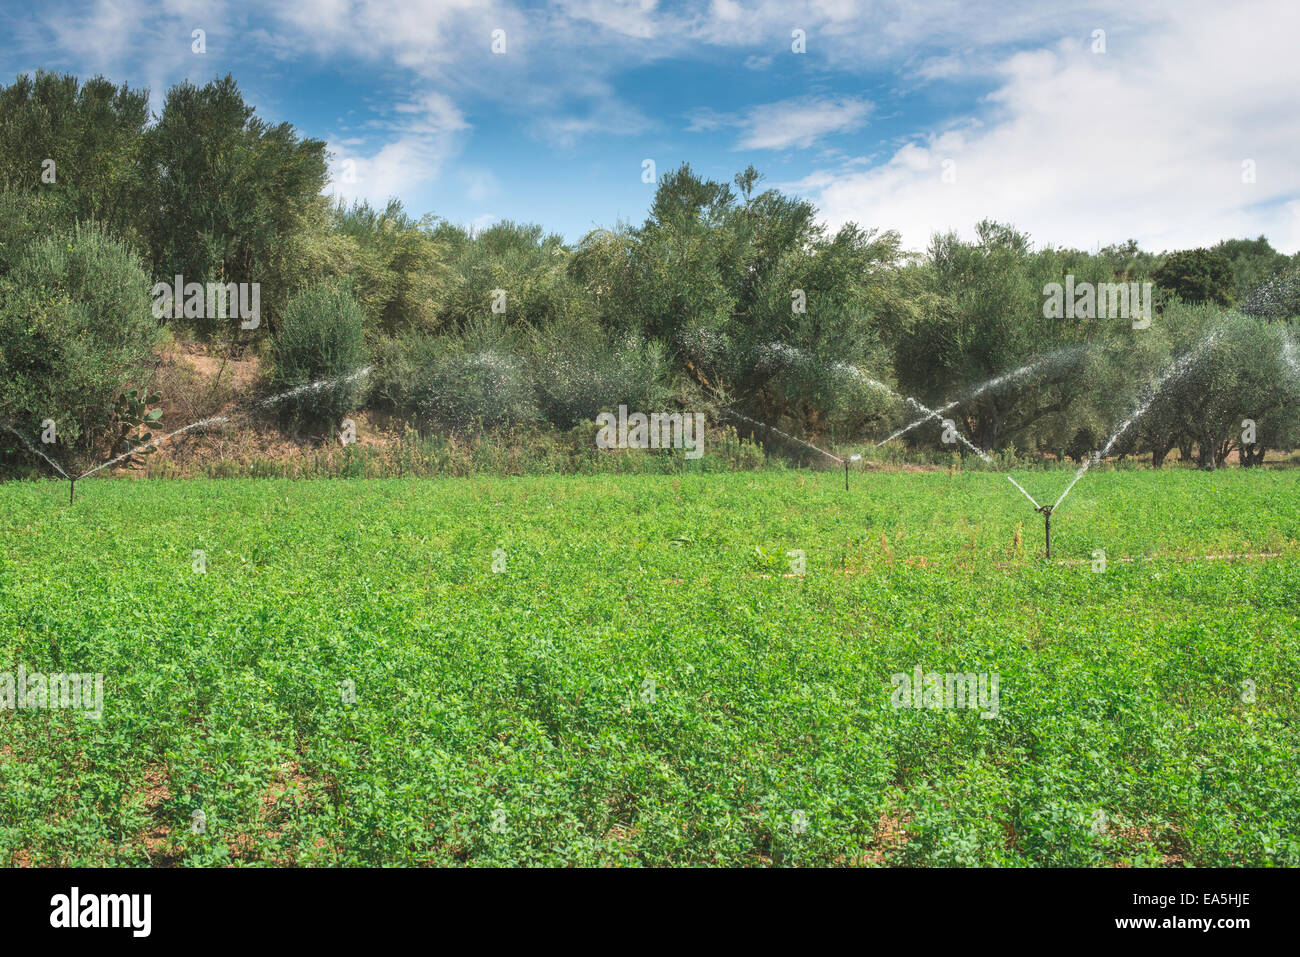 Les systèmes d'irrigation. Ciel bleu Banque D'Images